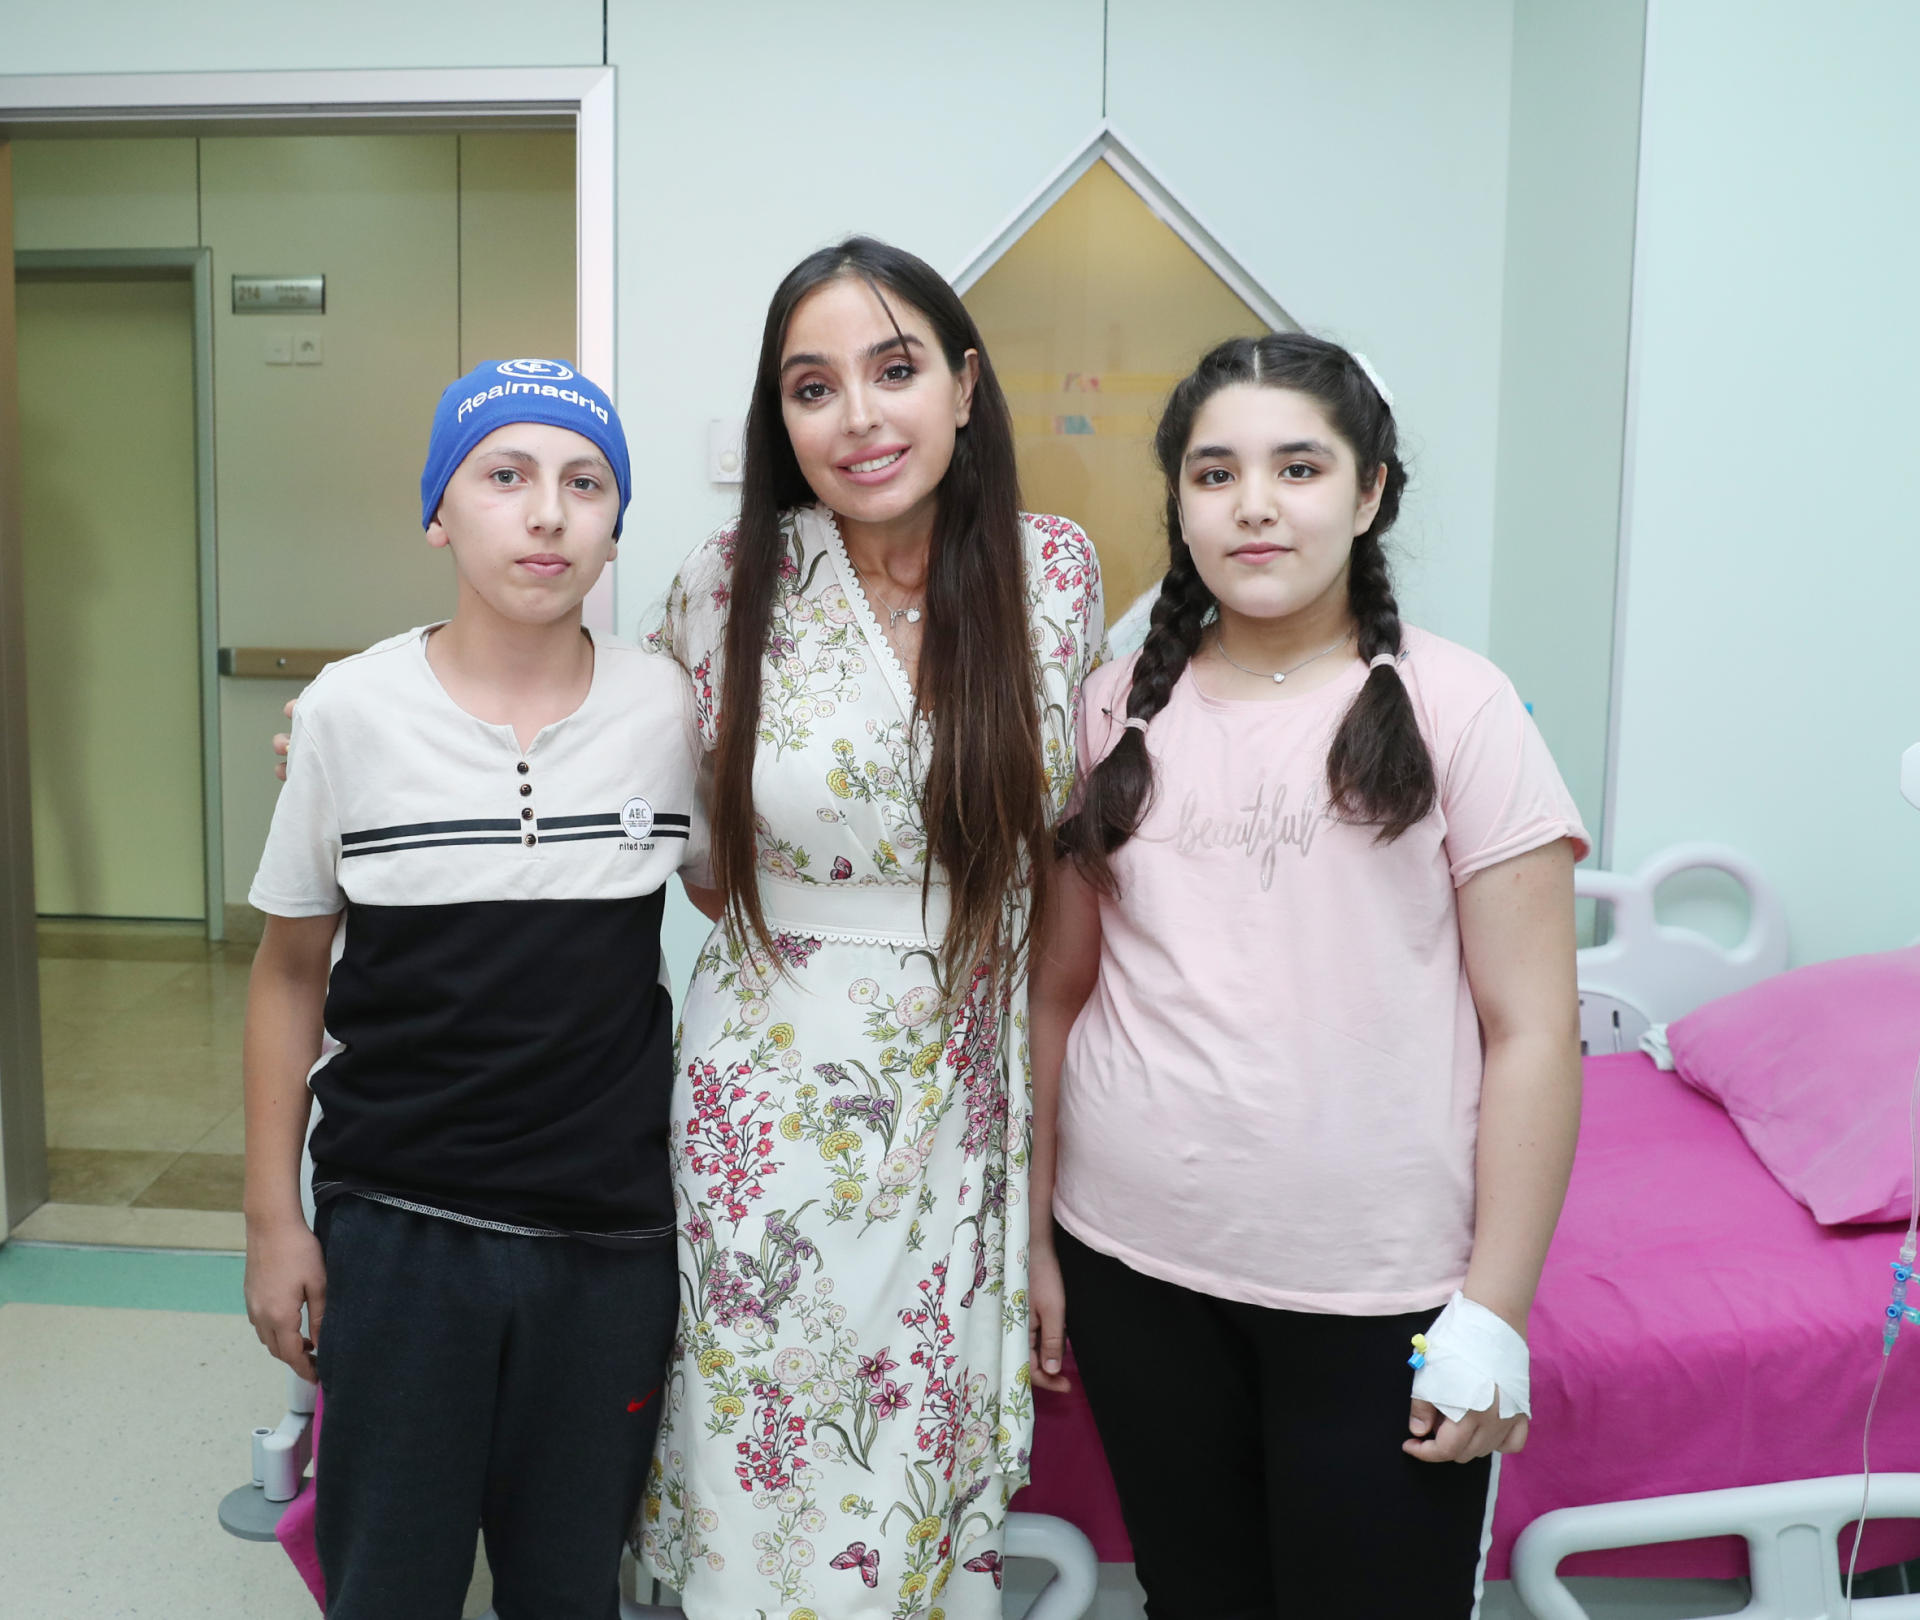 Vice-President of Heydar Aliyev Foundation Leyla Aliyeva visits several medical centers in Baku (PHOTO)